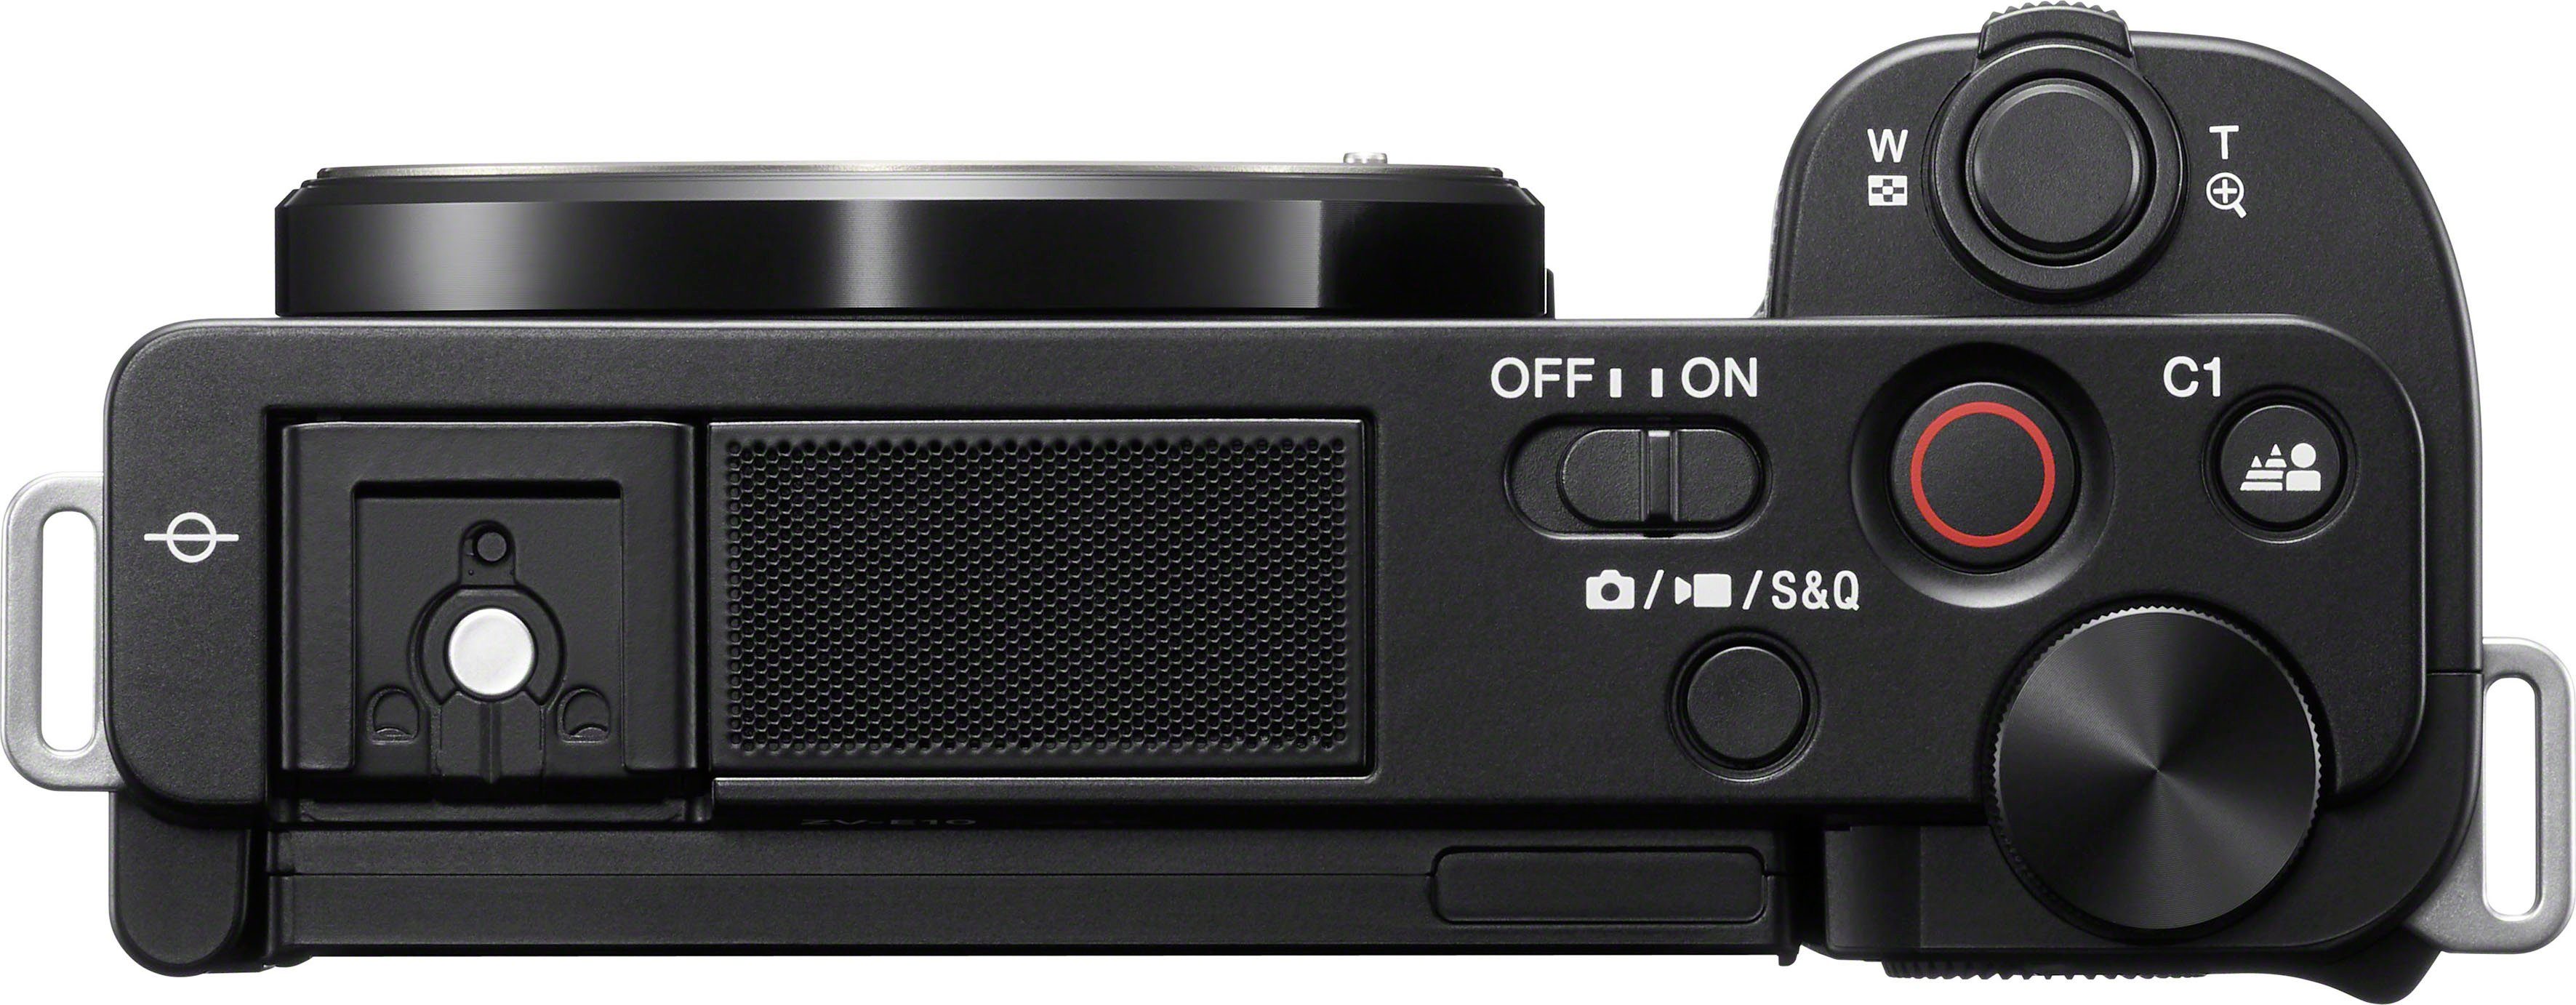 Bluetooth, 24,2 Display (WiFi), Sony OSS (E Systemkamera mit Objektiv) (SELP1650), - 16 50 5.6 inkl. SEL16-50 schwenkbarem PZ ZV-E10L MP, F3.5 Vlog-Kamera - WLAN mm